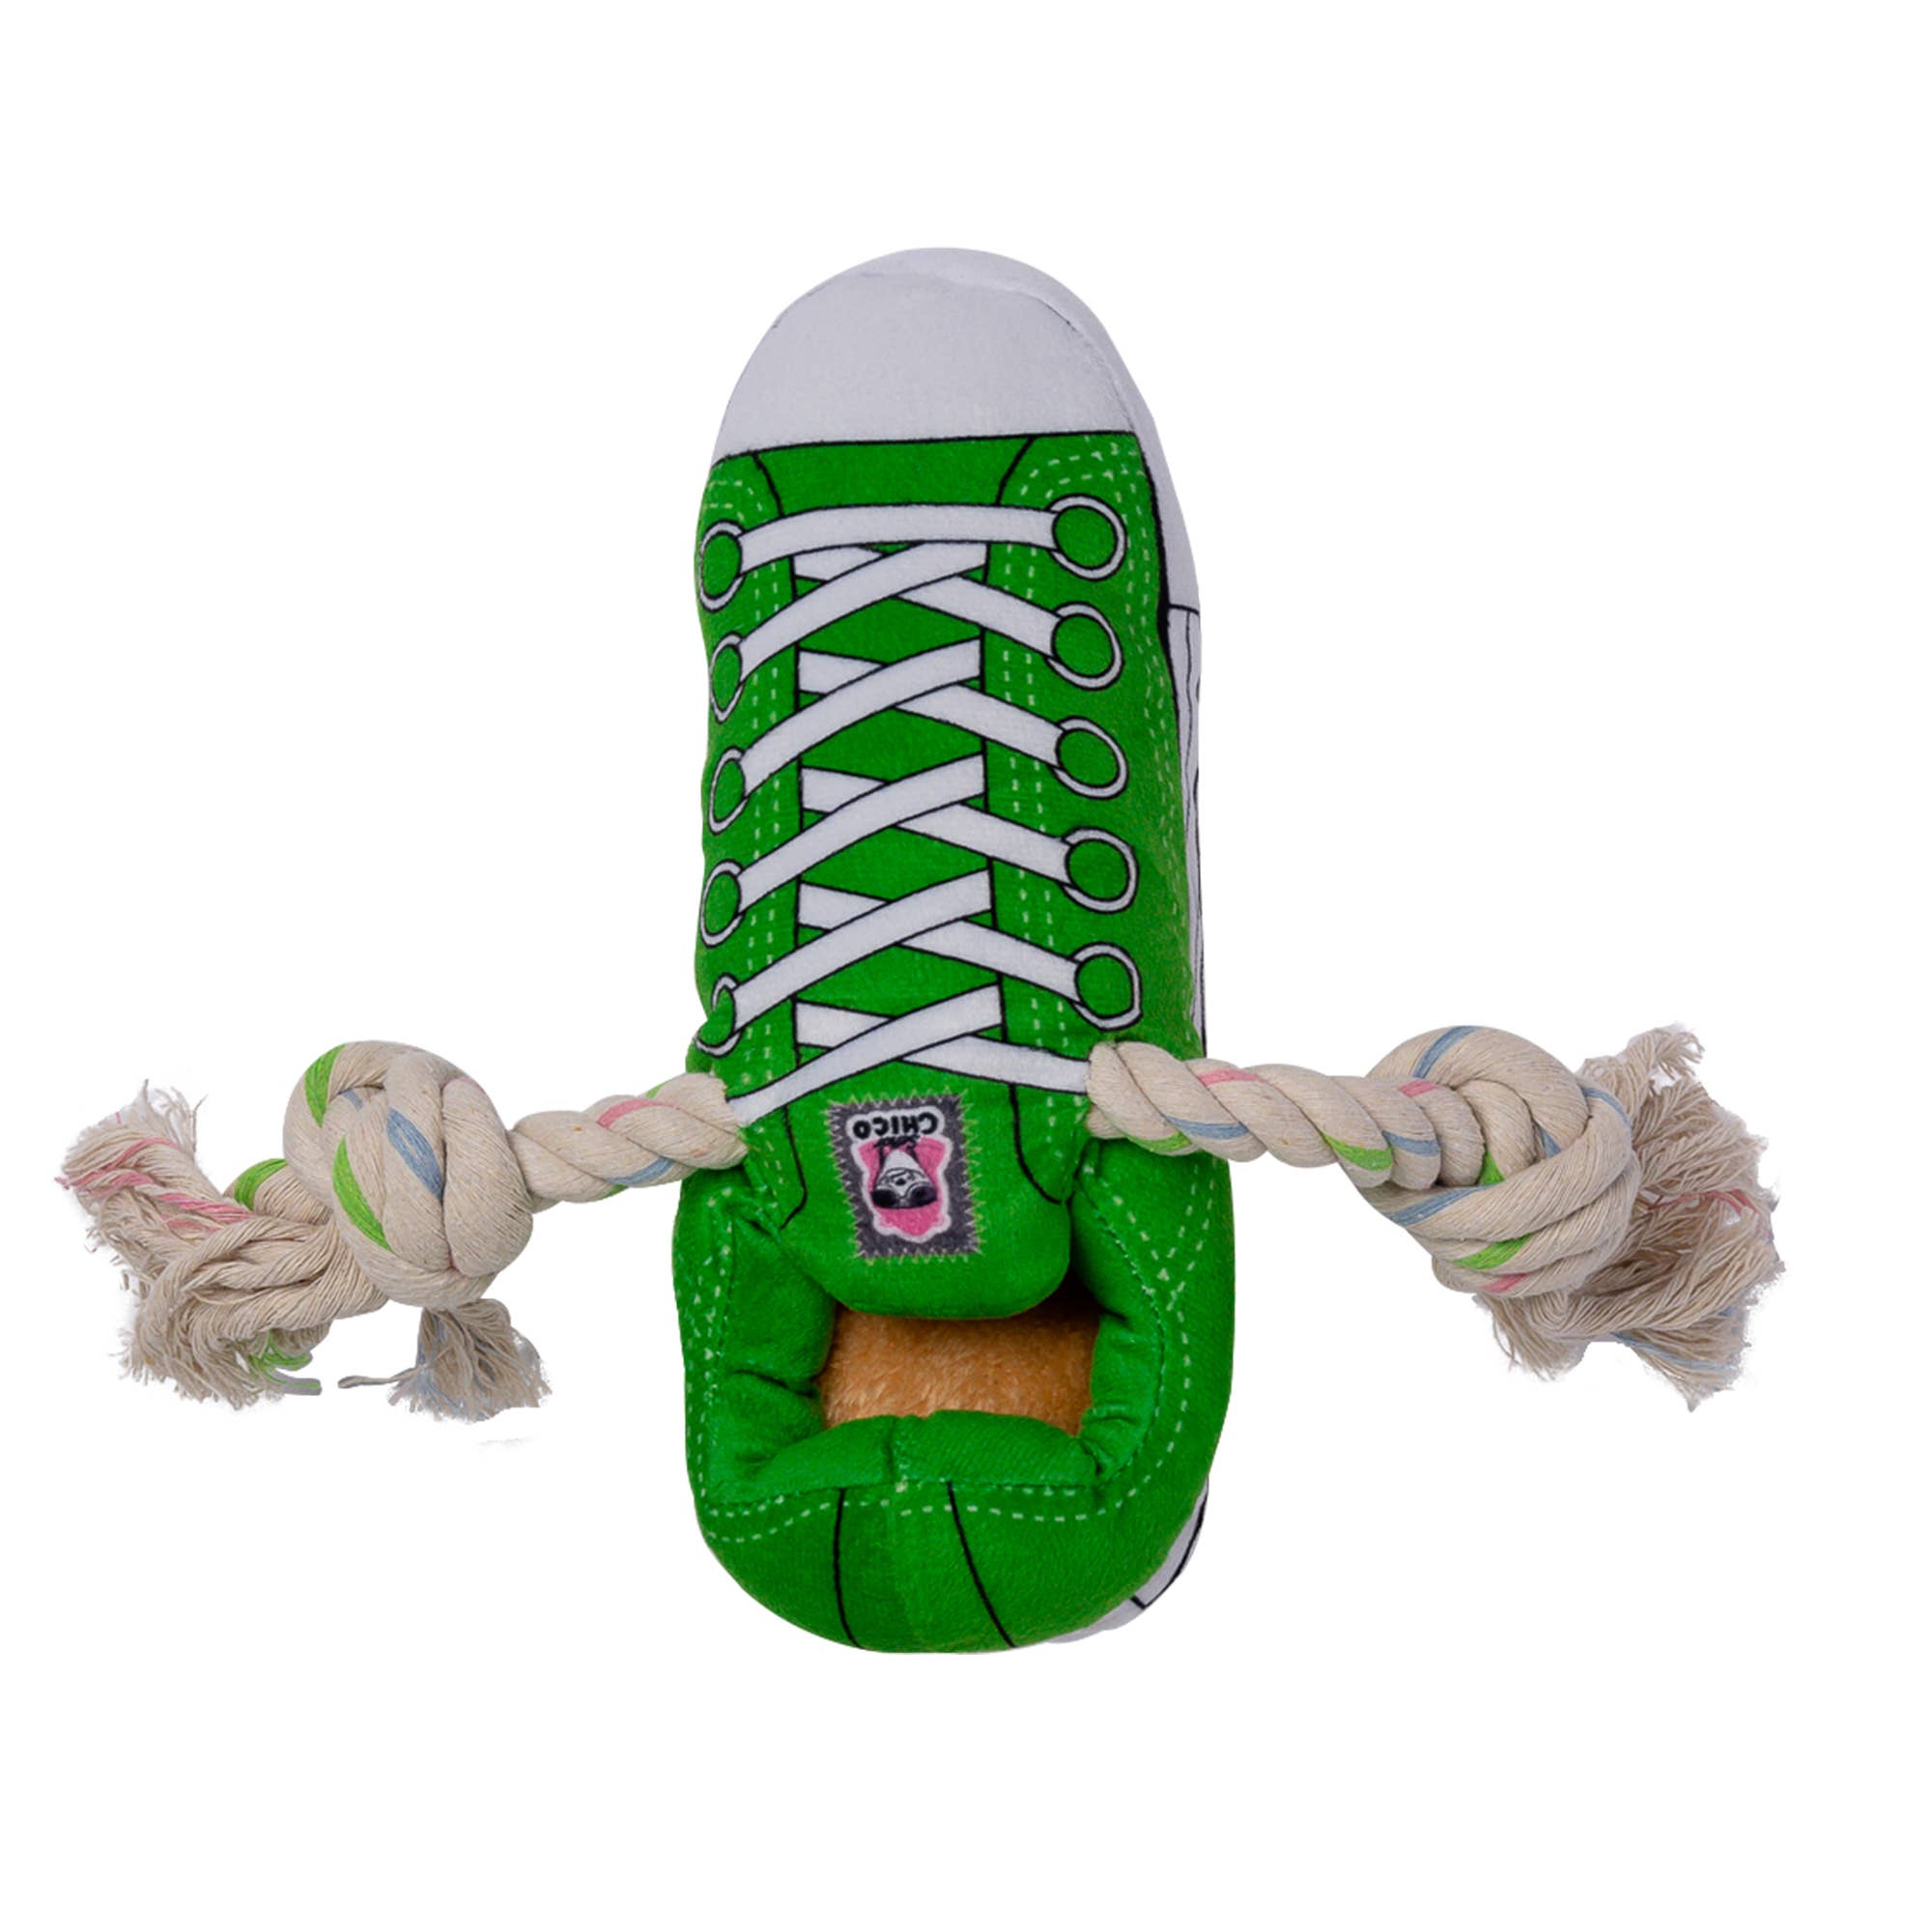 Squeaking Comfort Plush Sneaker Dog Toy - Green-0